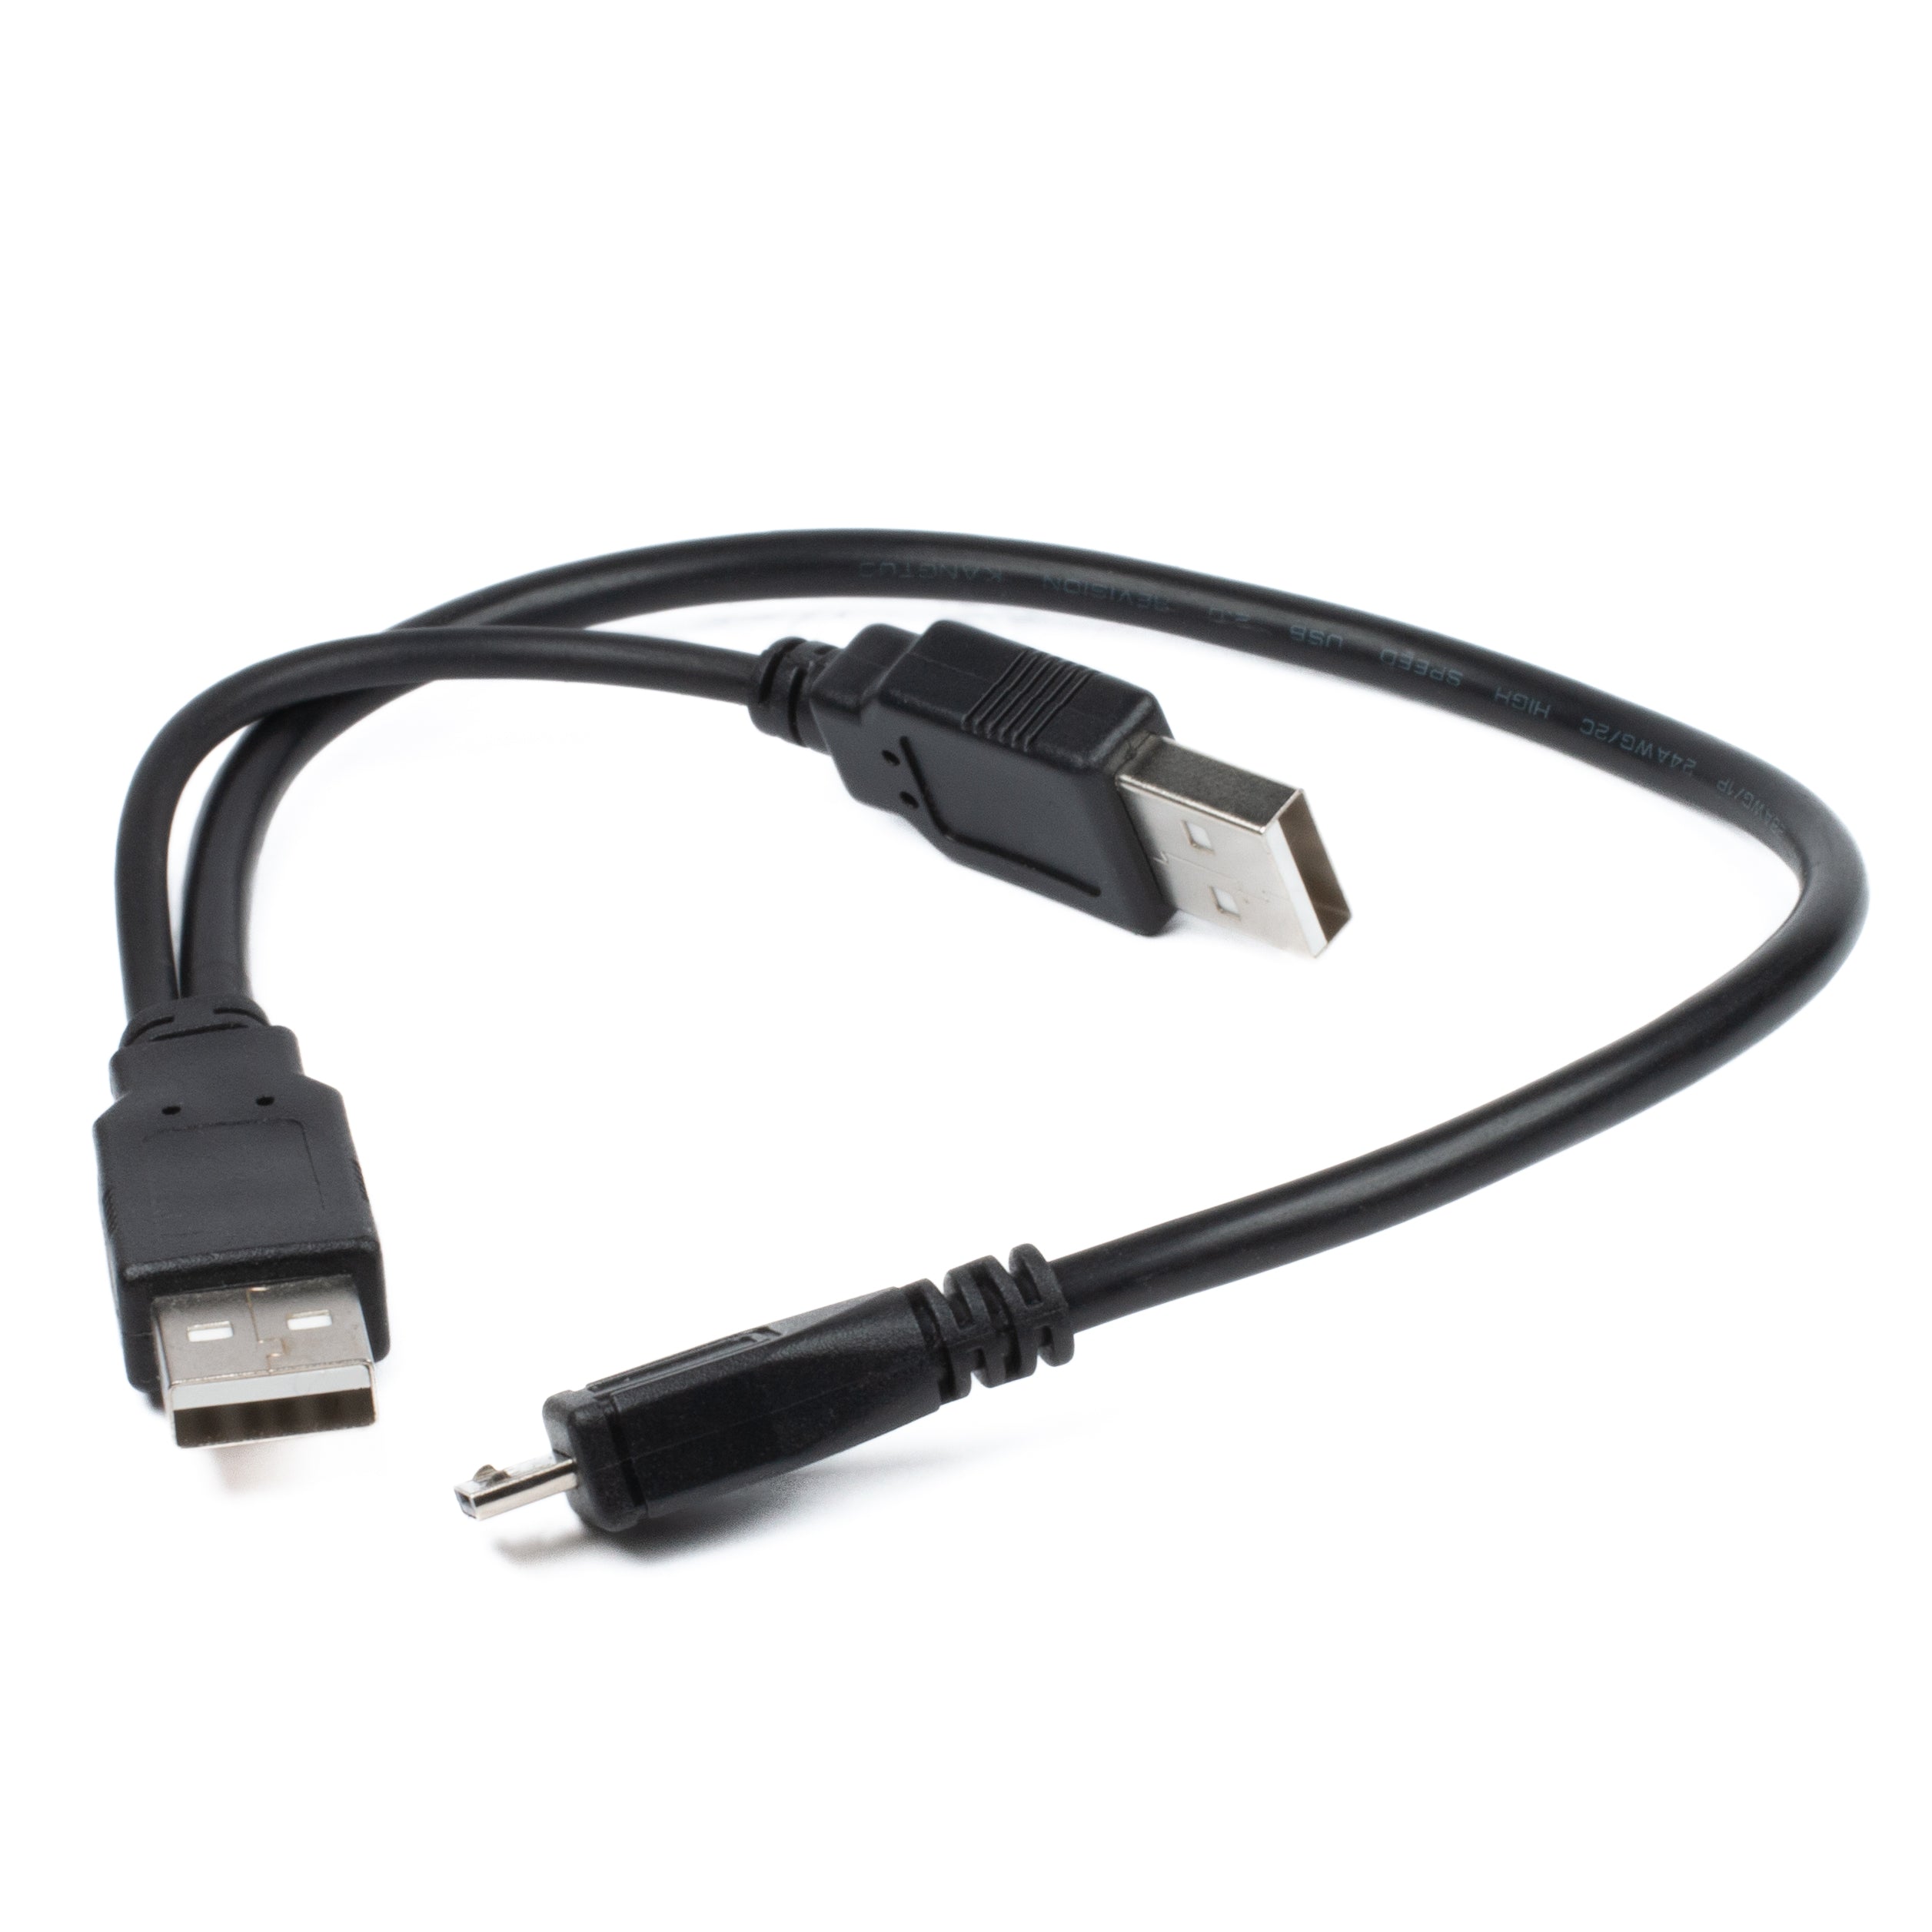 Dual USB-A USB Micro-B Cable